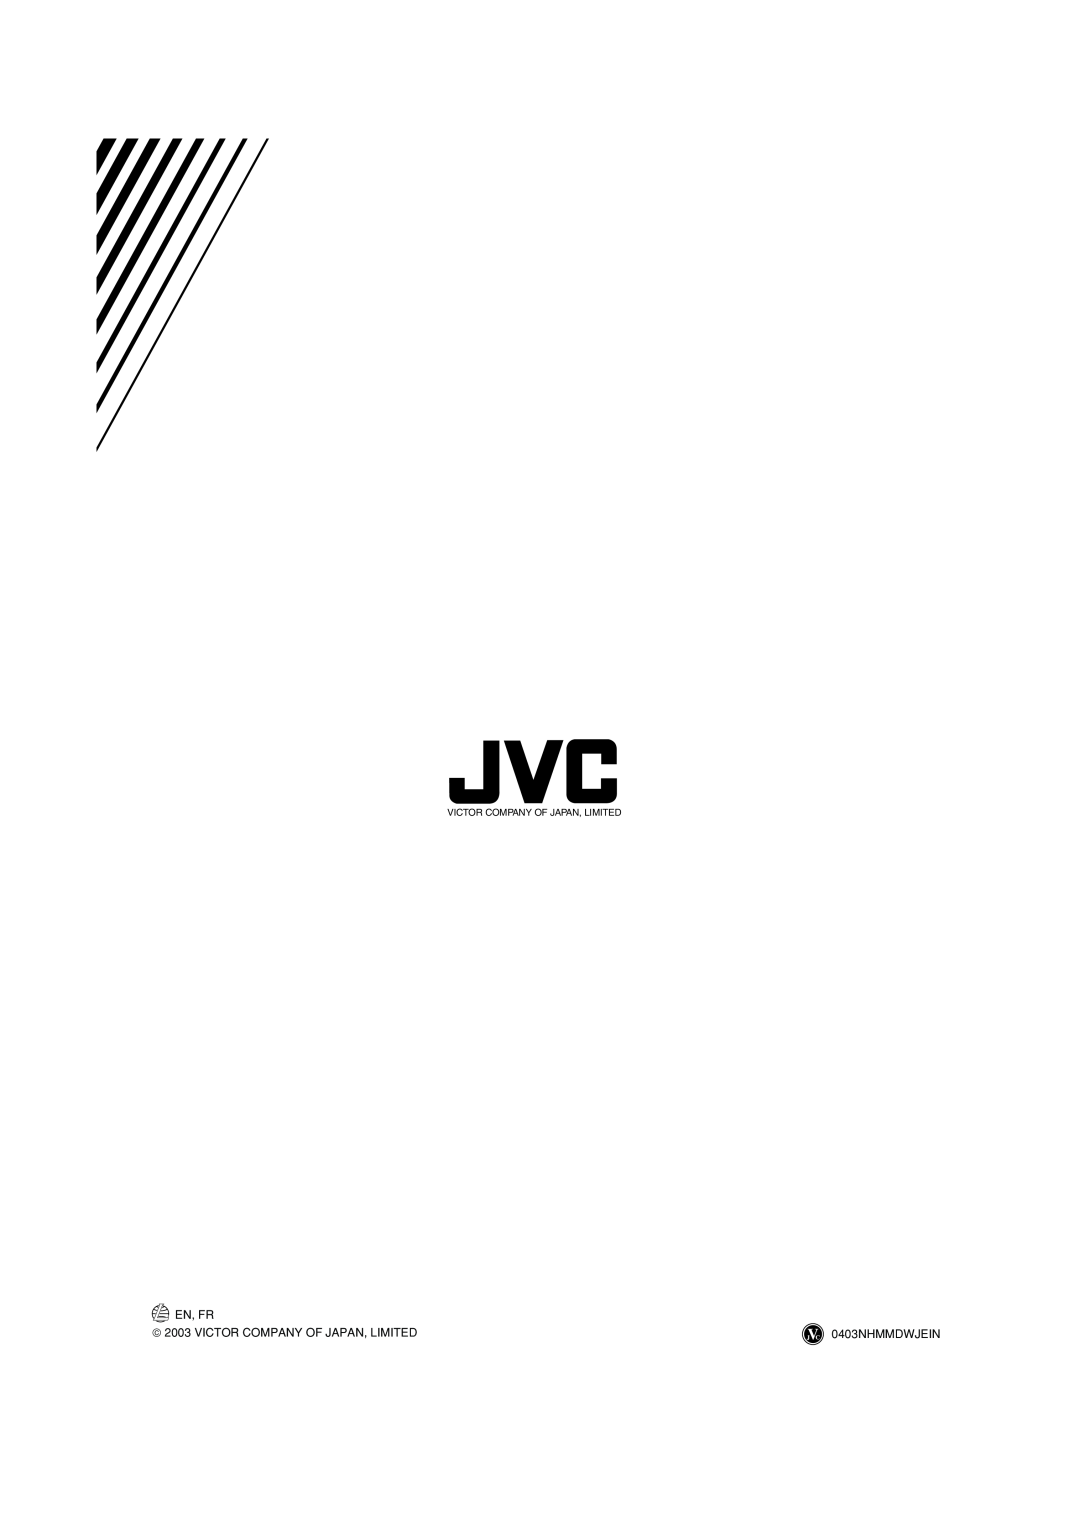 JVC RX-ES1SL manual En, Fr,  2003 VICTOR COMPANY OF JAPAN, LIMITED, 0403NHMMDWJEIN, Victor Company Of Japan, Limited 